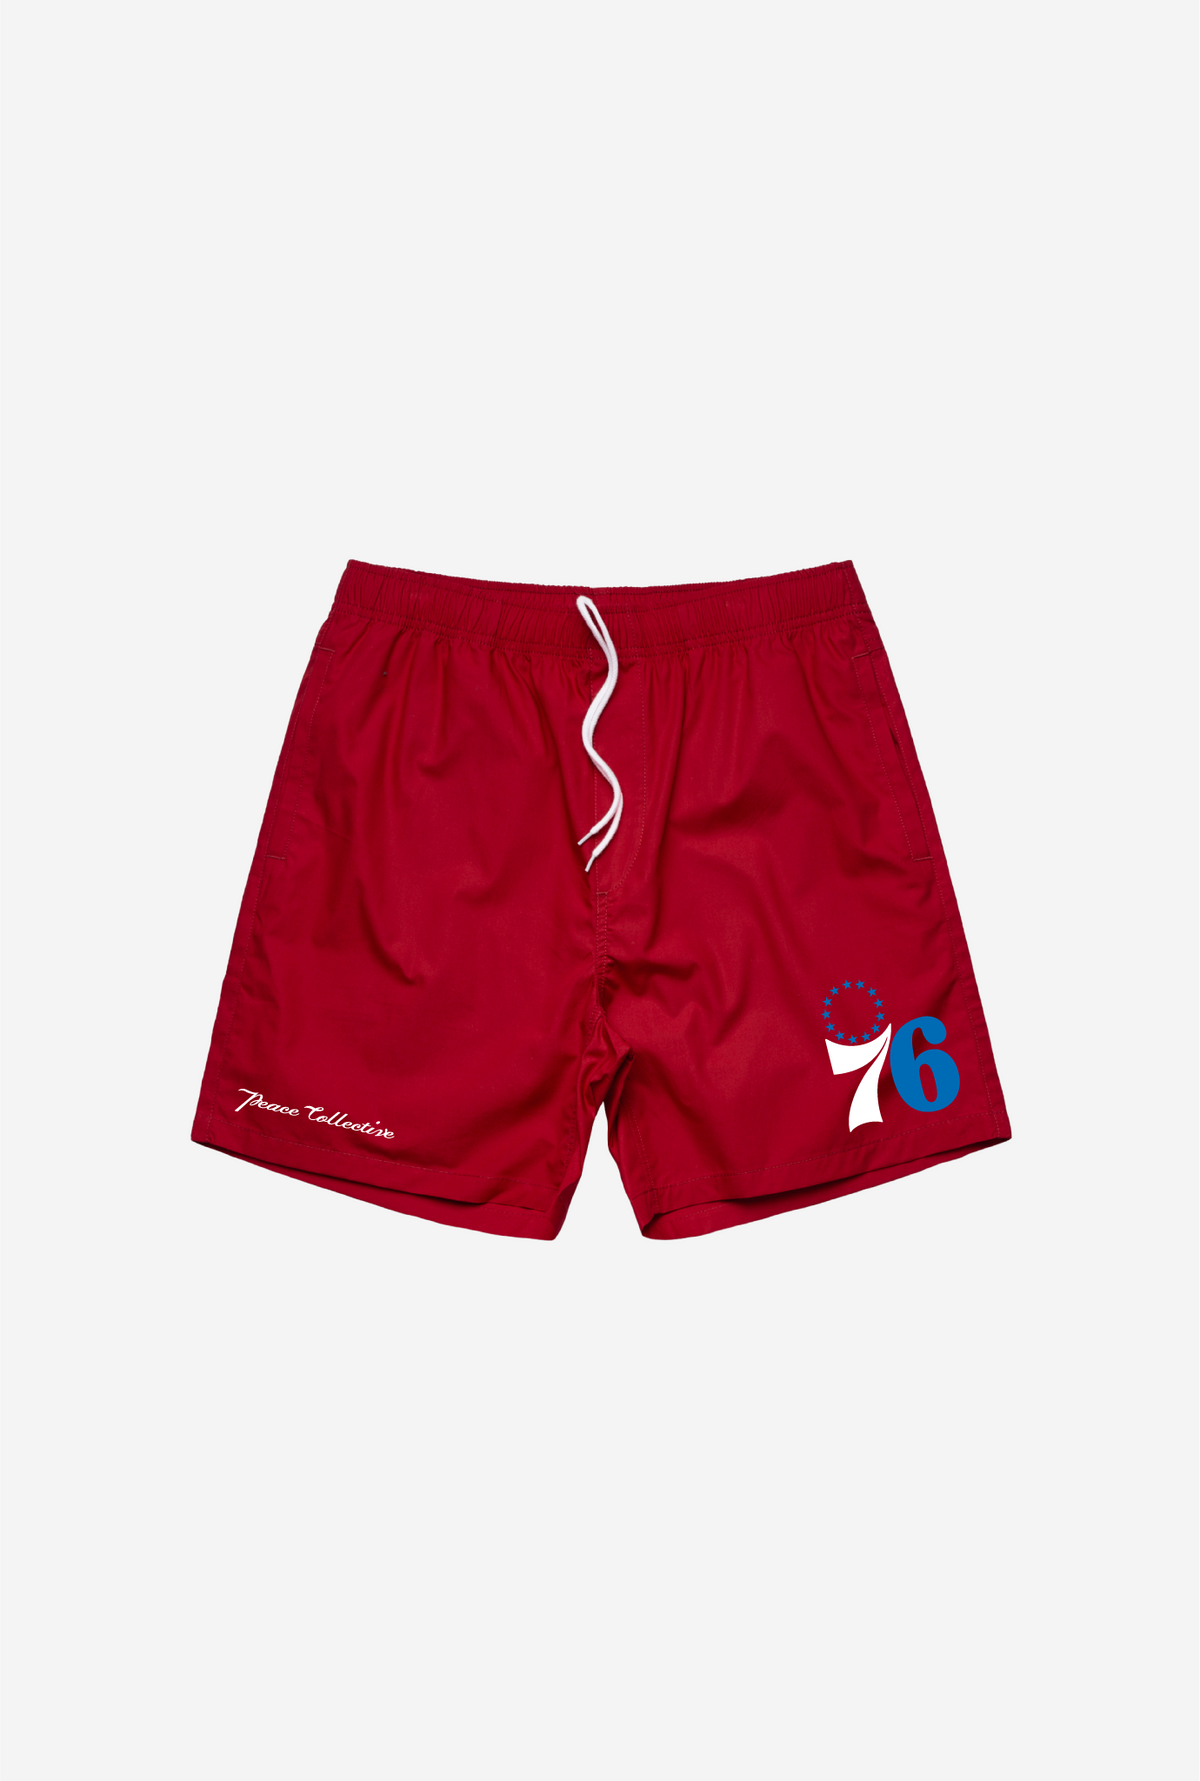 Philadelphia 76ers Shorts - Red